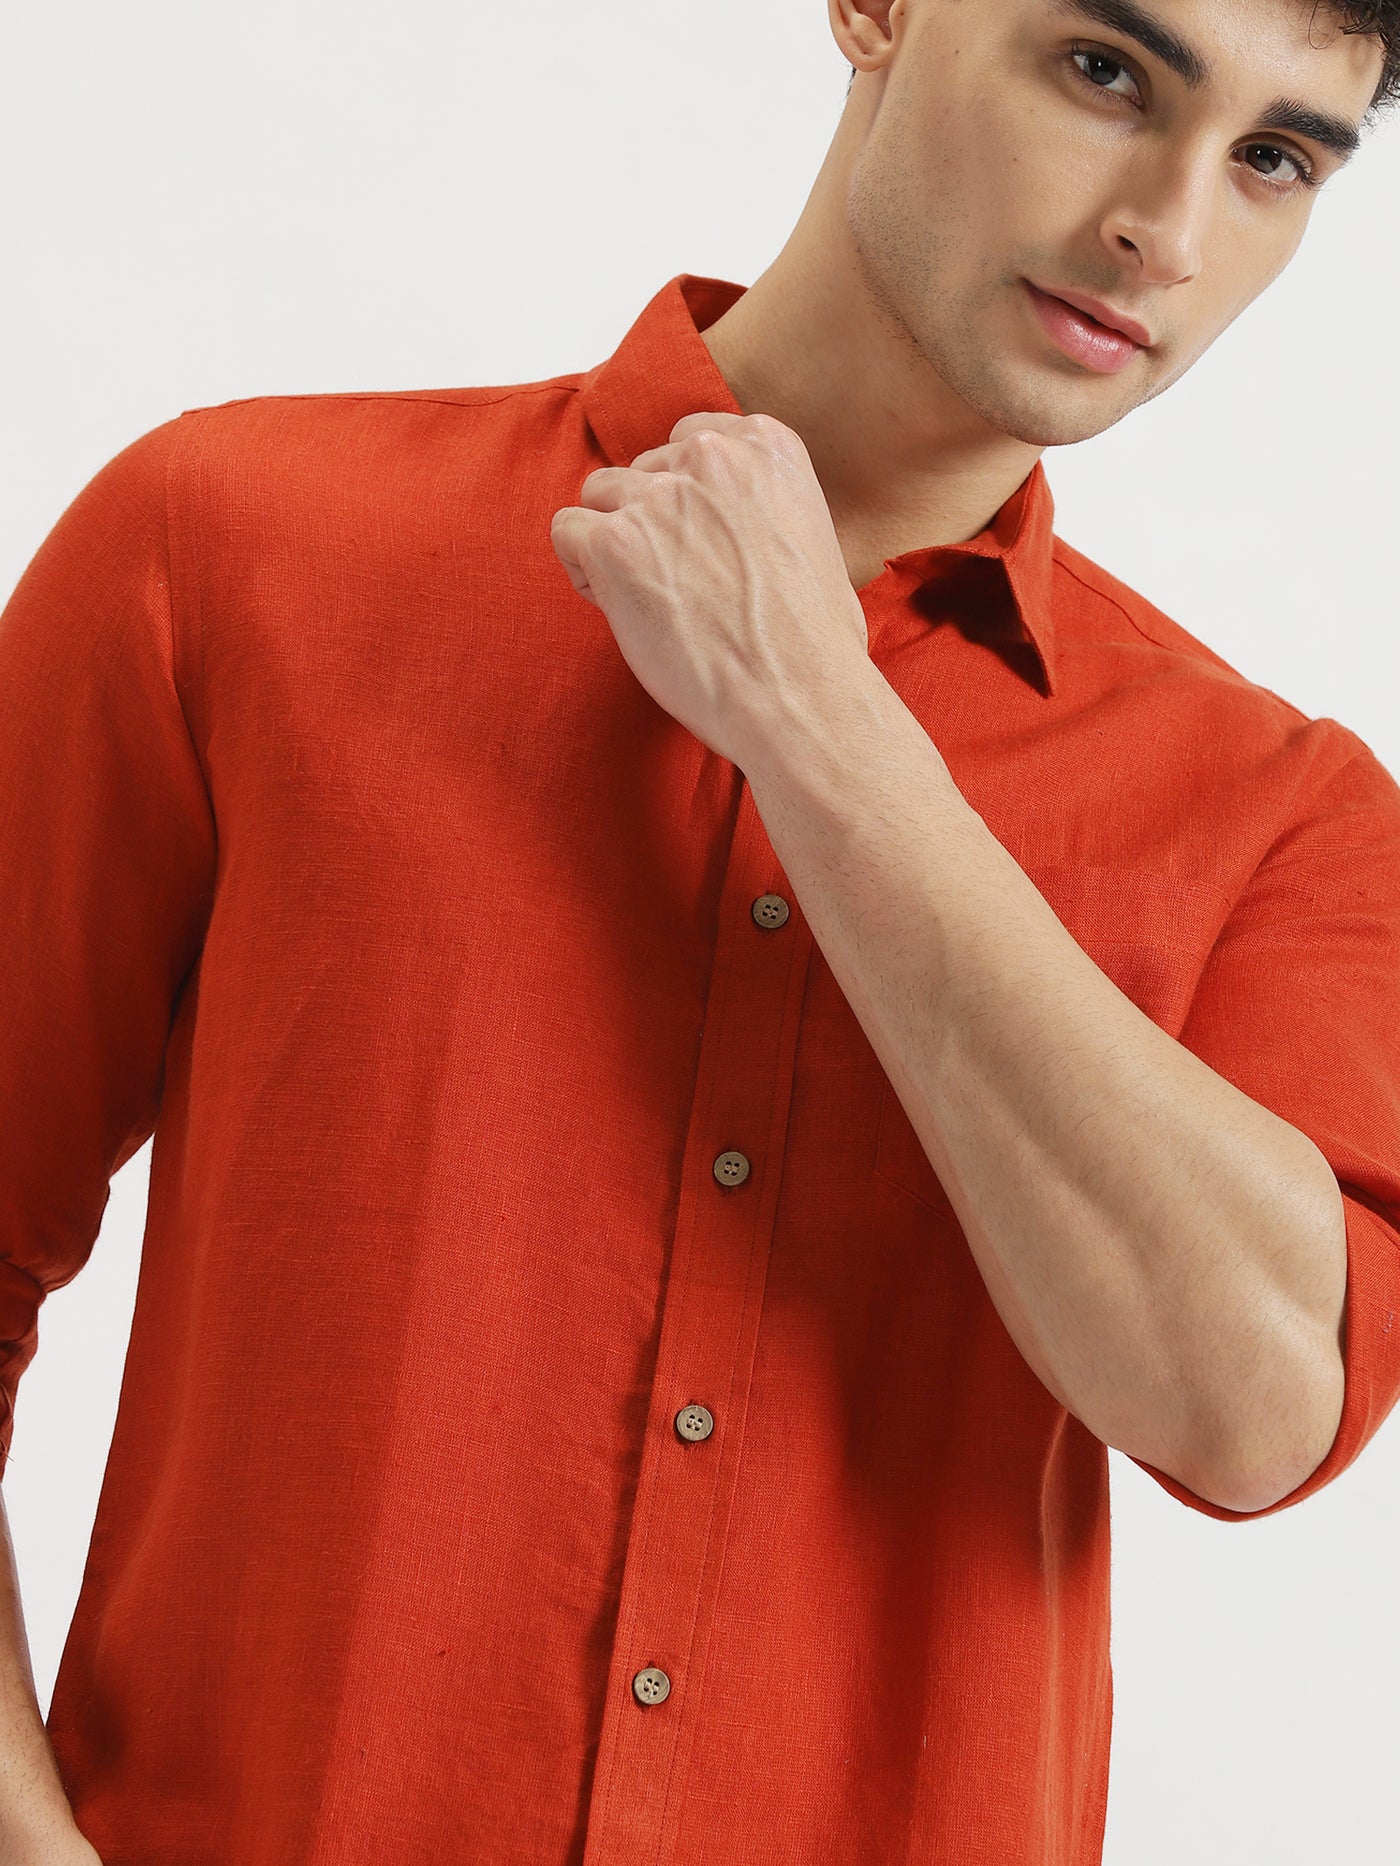 Harvey - Men's Pure Linen Full Sleeve Shirt - Rust